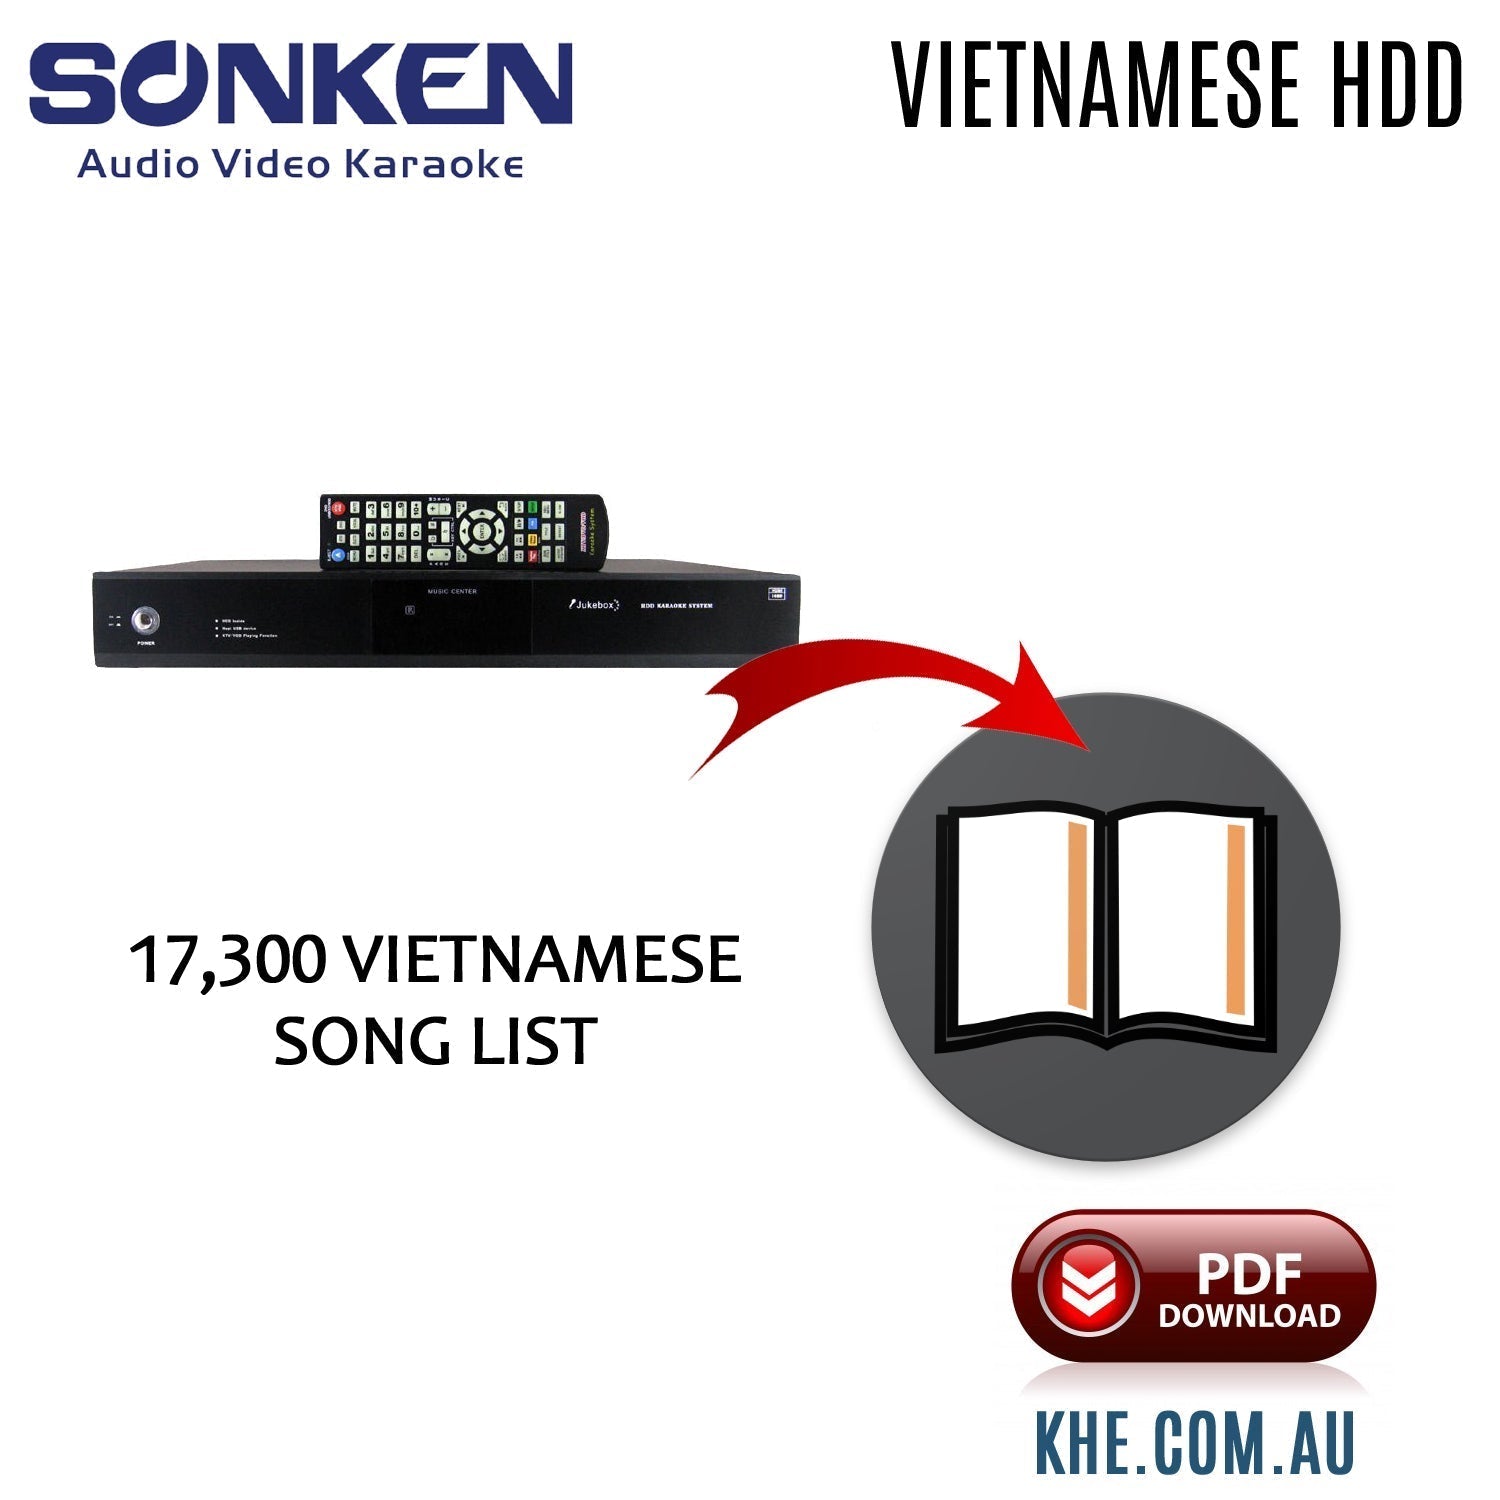 Vietnamese (17,300) Song Book for Sonken Vietnamese 1TB Karaoke HDD System - Karaoke Home Entertainment